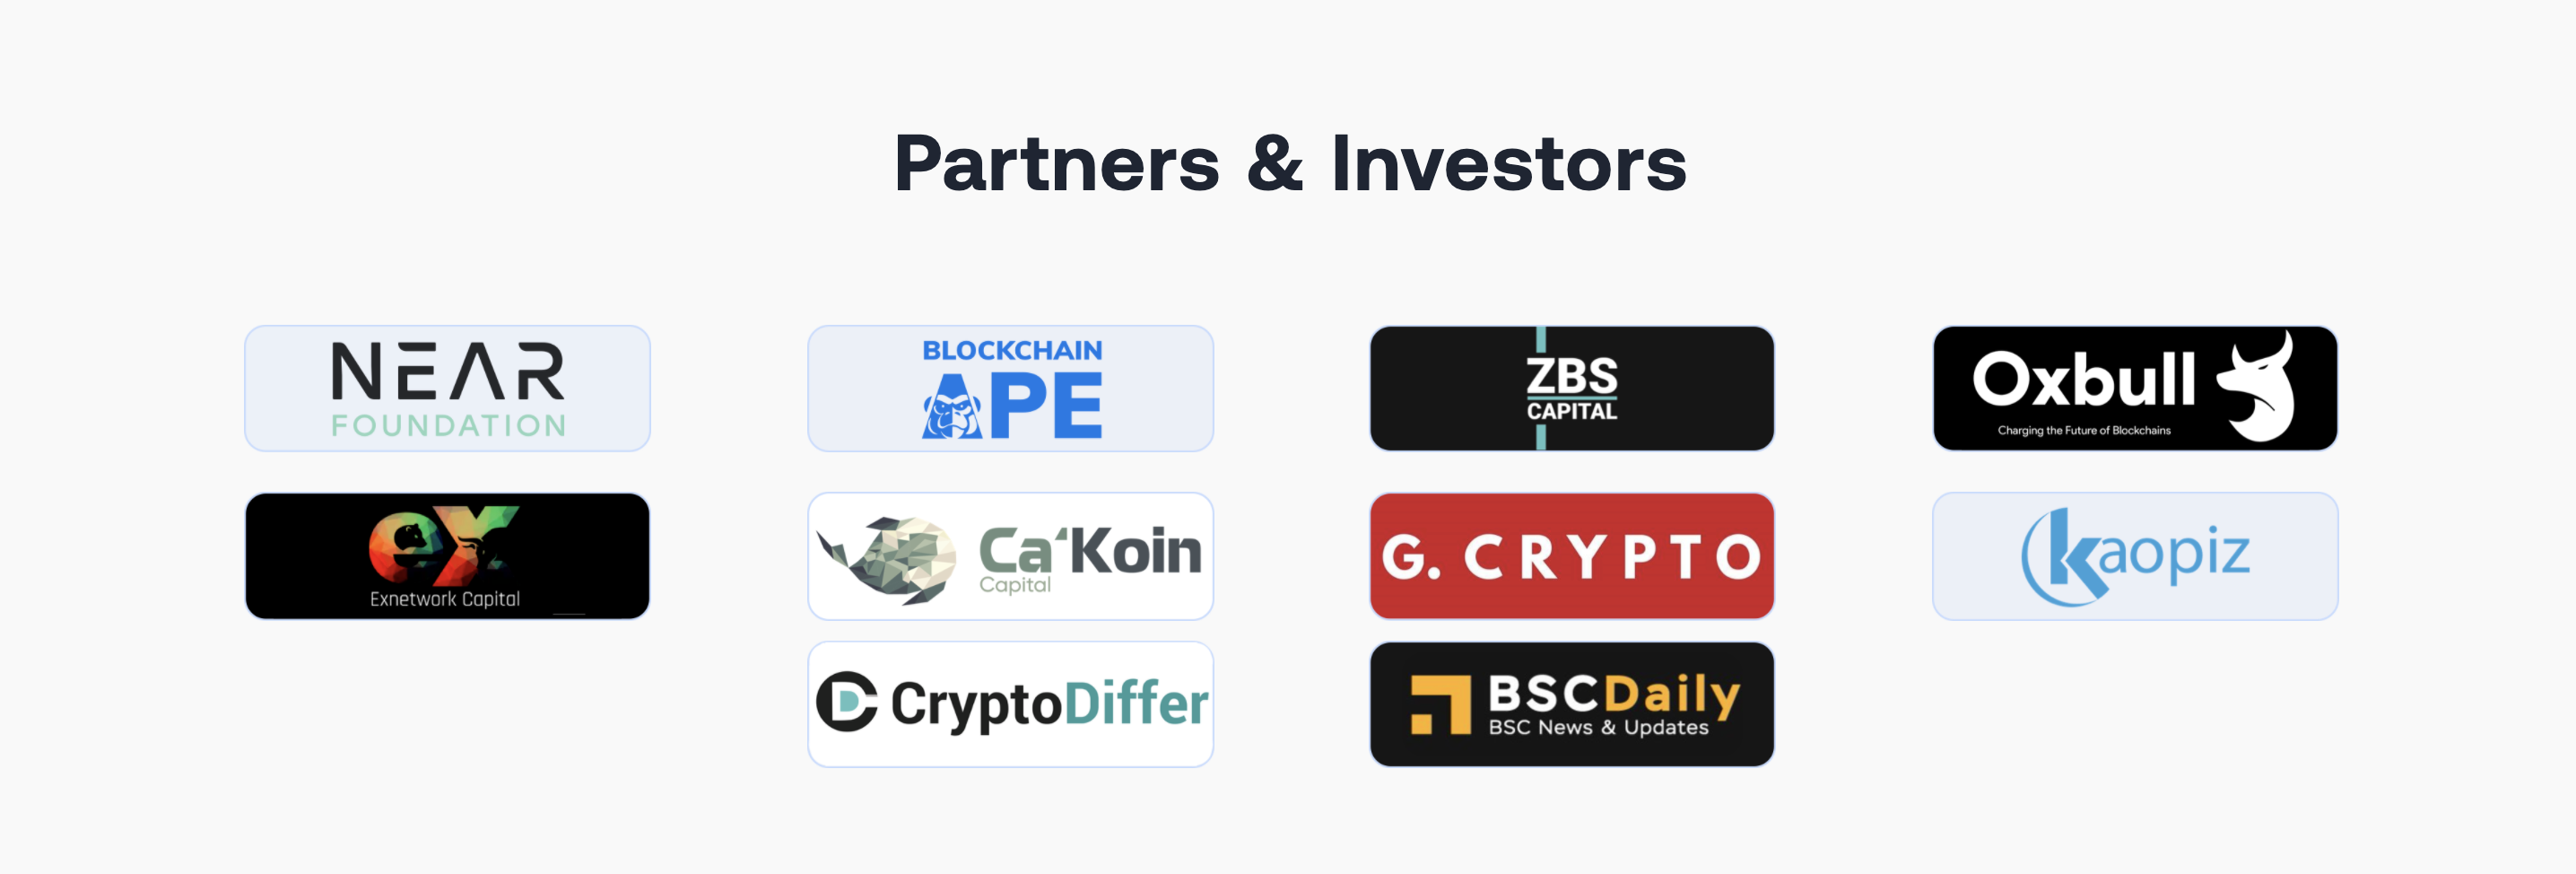 DePocket Partners and Investors